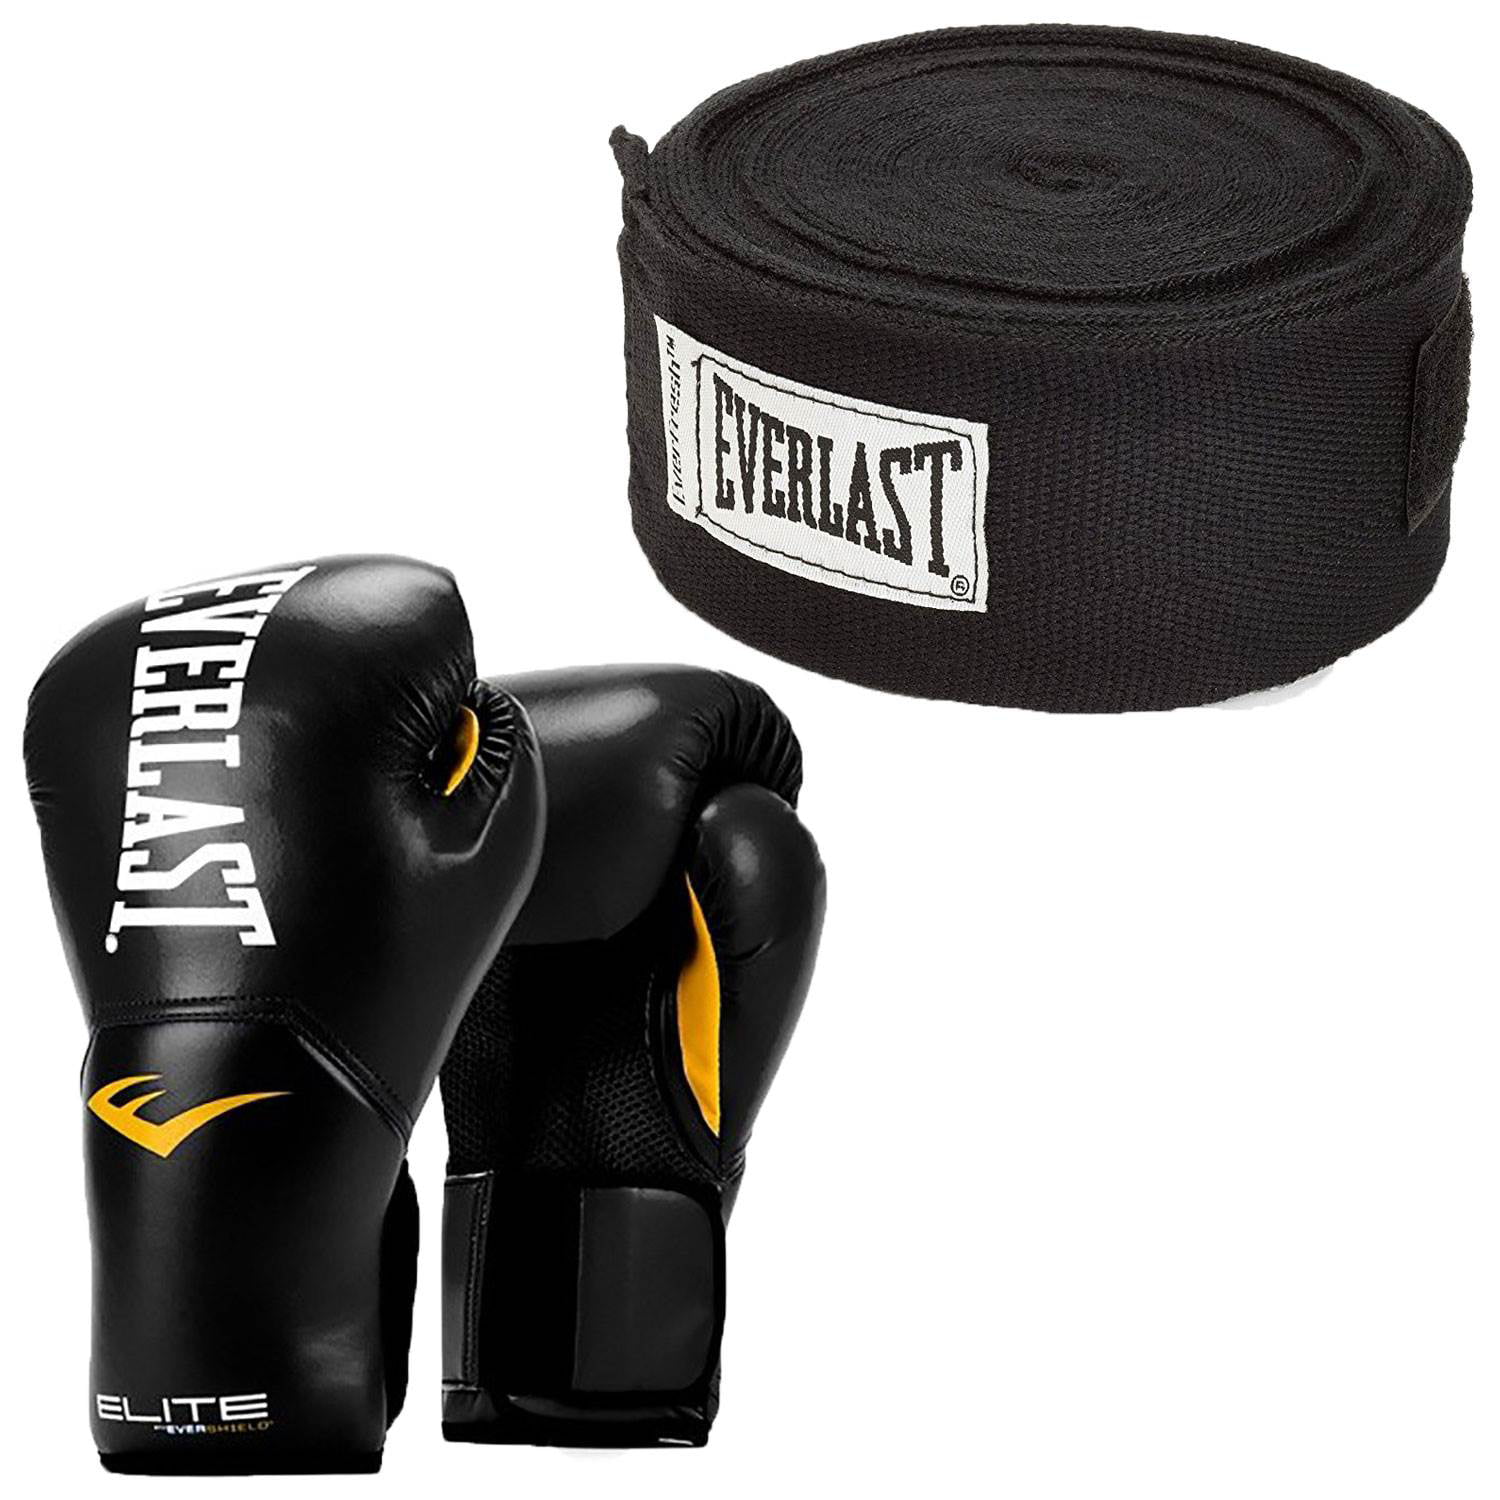 Black Black and 120 Inch Hand Wraps Everlast Elite Pro Boxing Gloves Size 12 